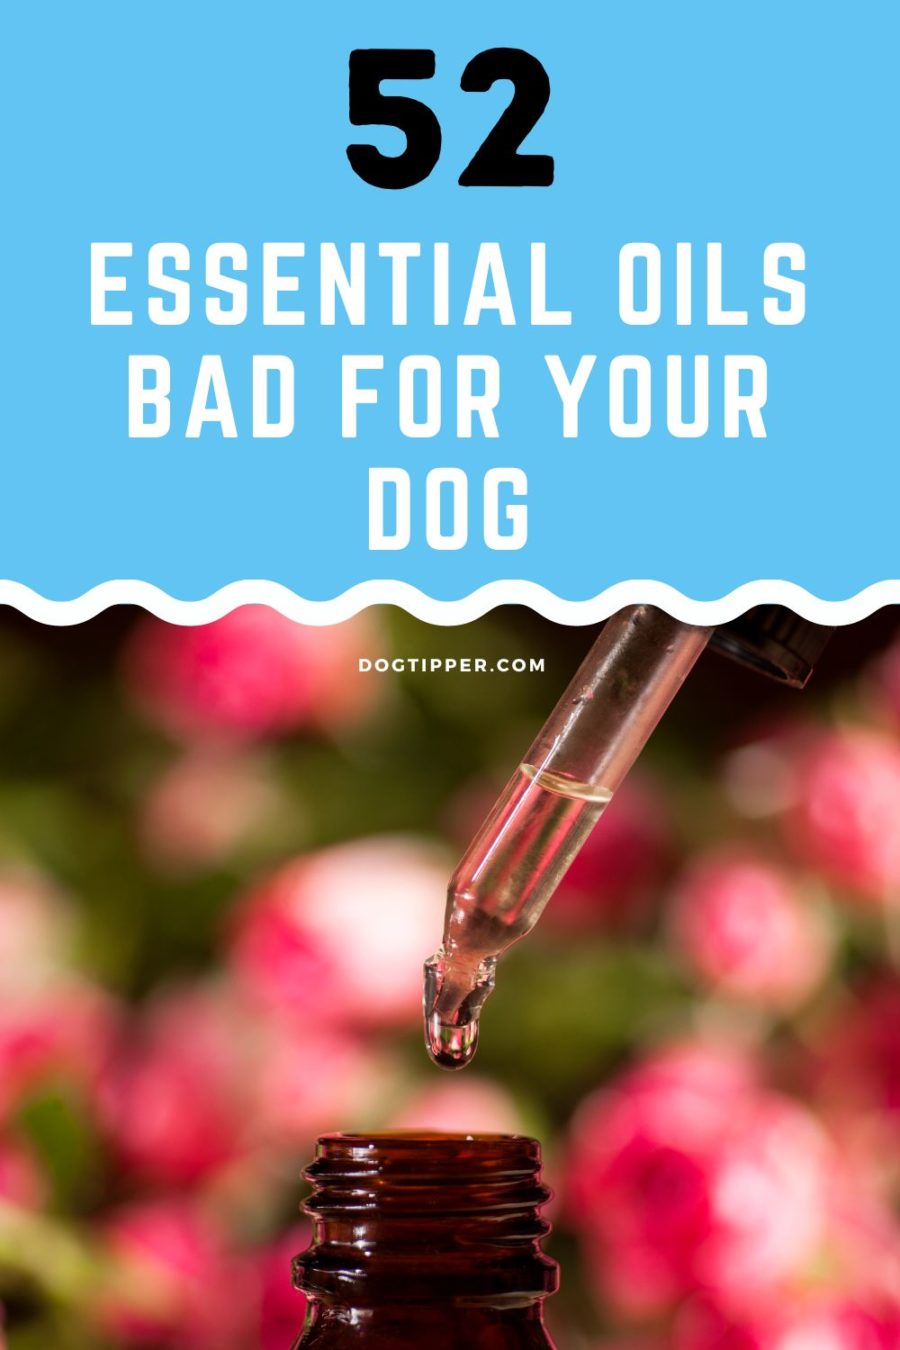 Essential oils not safe for pets